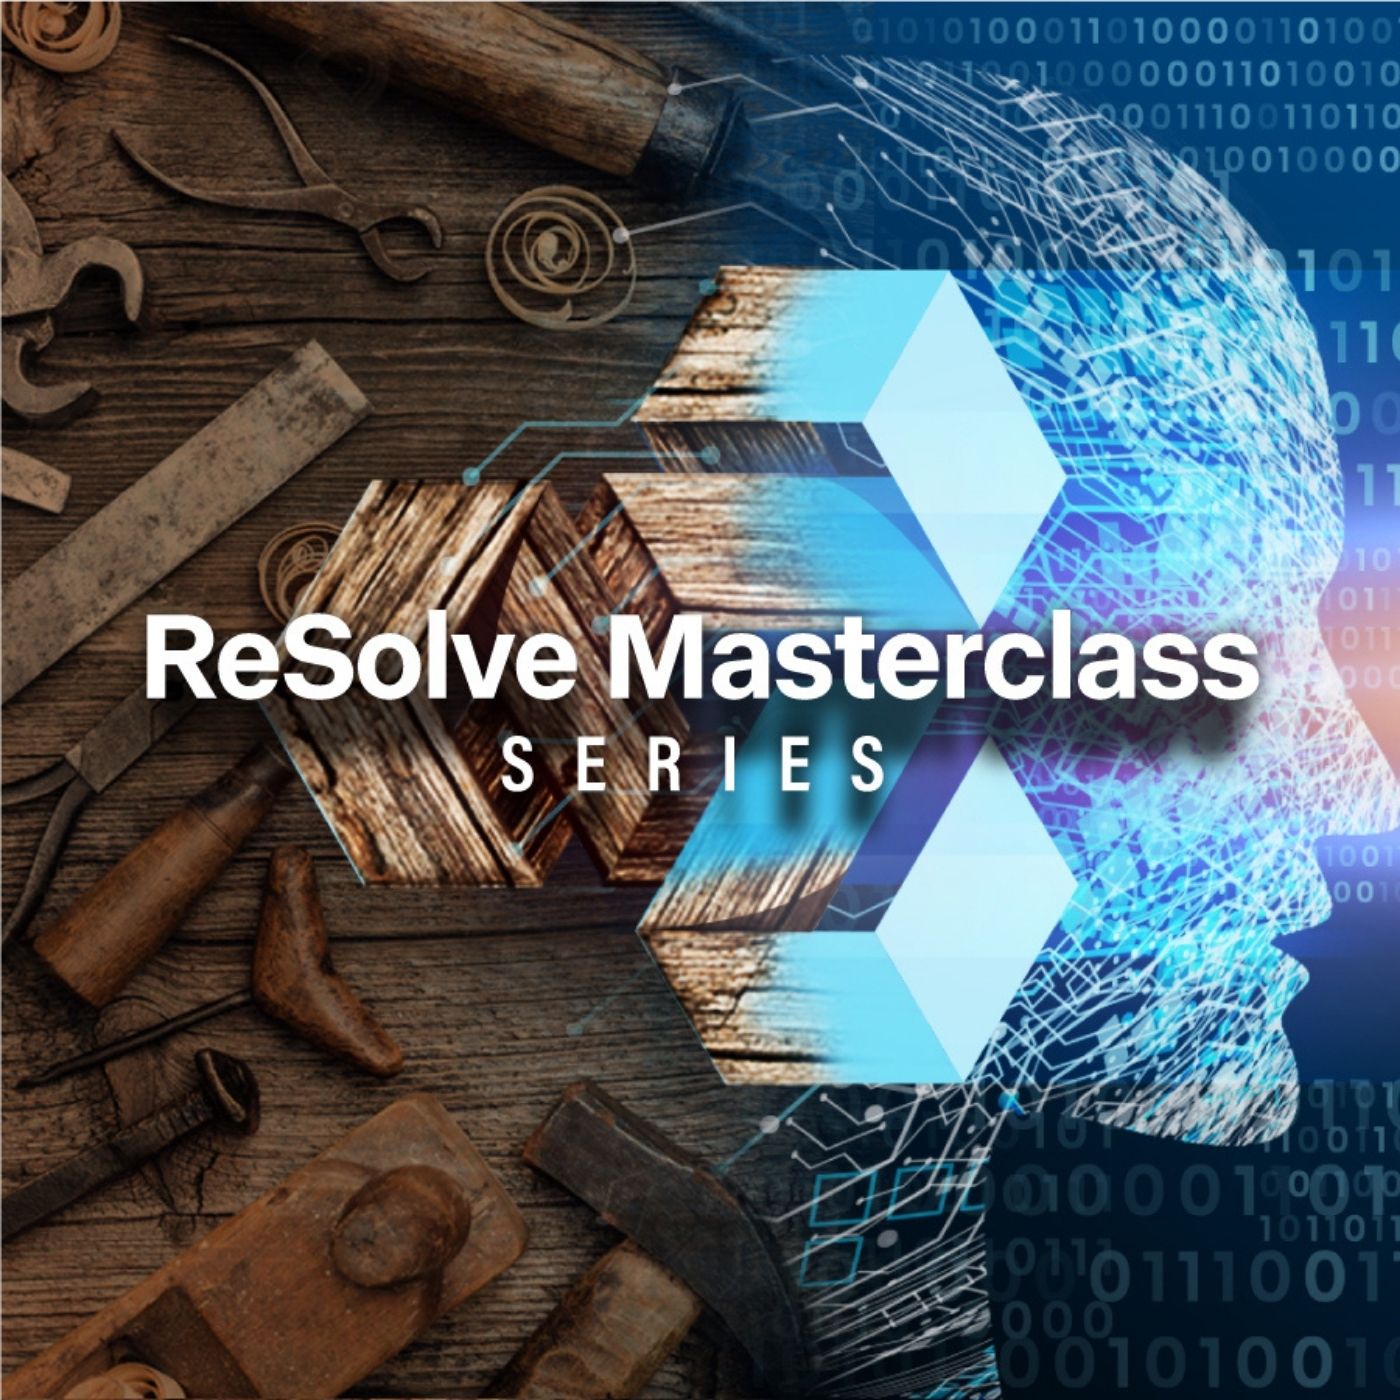 ReSolve's Masterclass